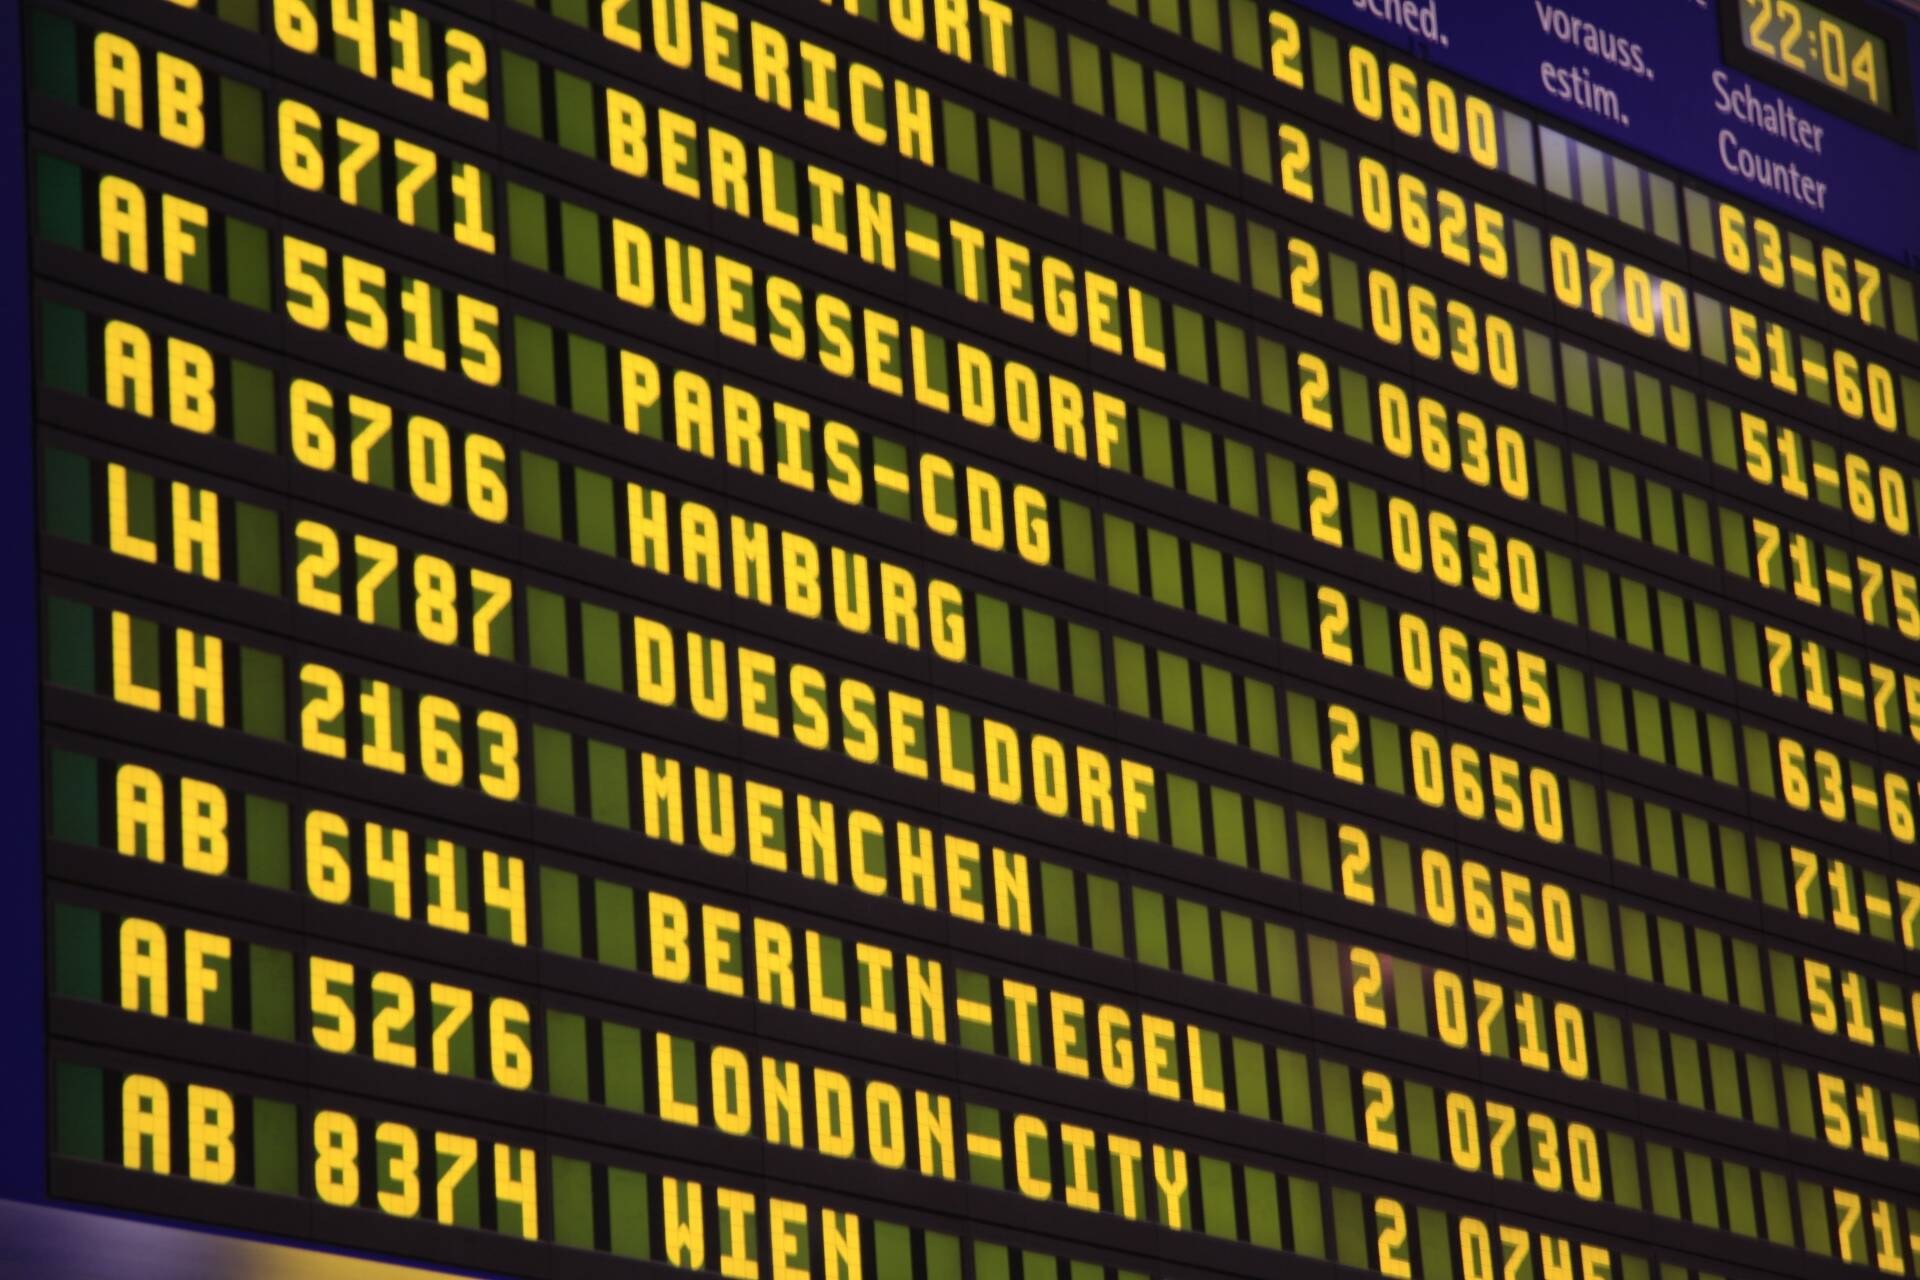 Airport arrivals board showing flights from Zurich, Berlin, Dusseldorf and Paris